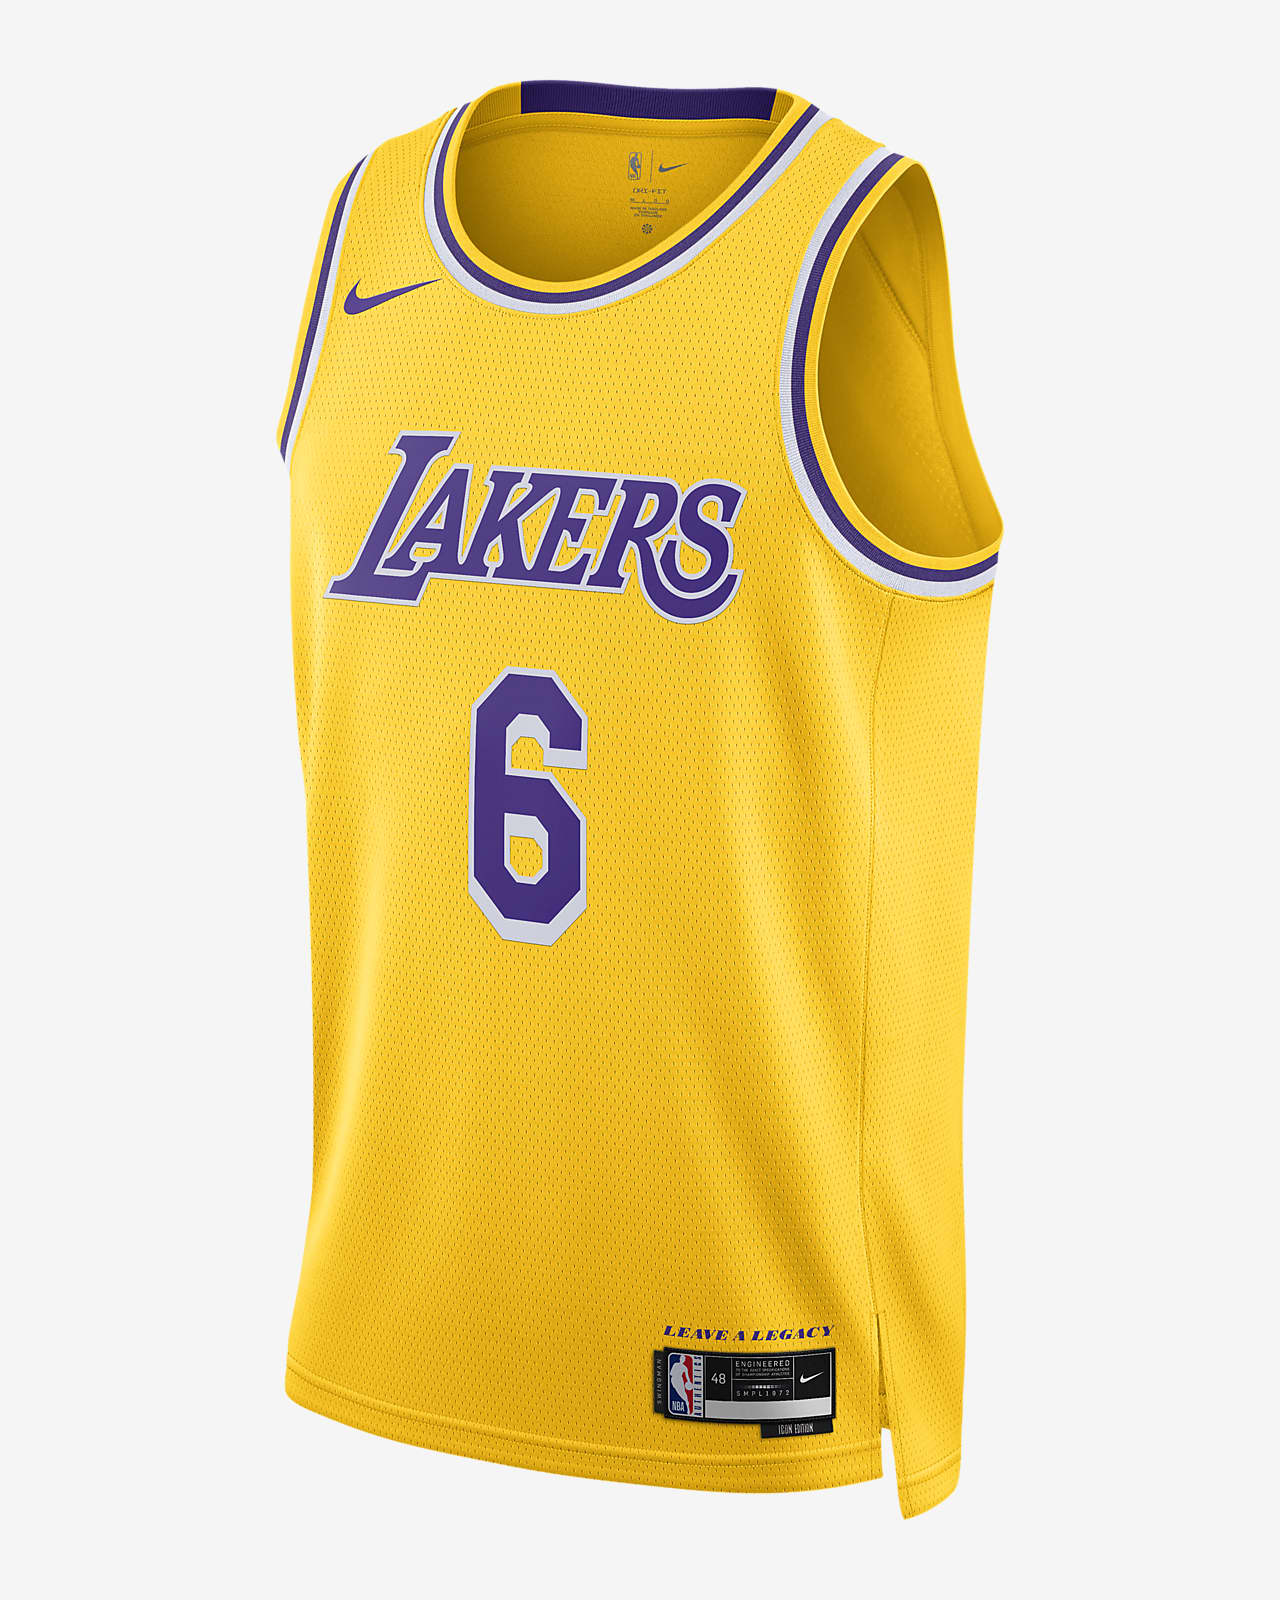 2022/23 赛季洛杉矶湖人队 Icon Edition Nike Dri-FIT NBA Swingman Jersey 男子球衣